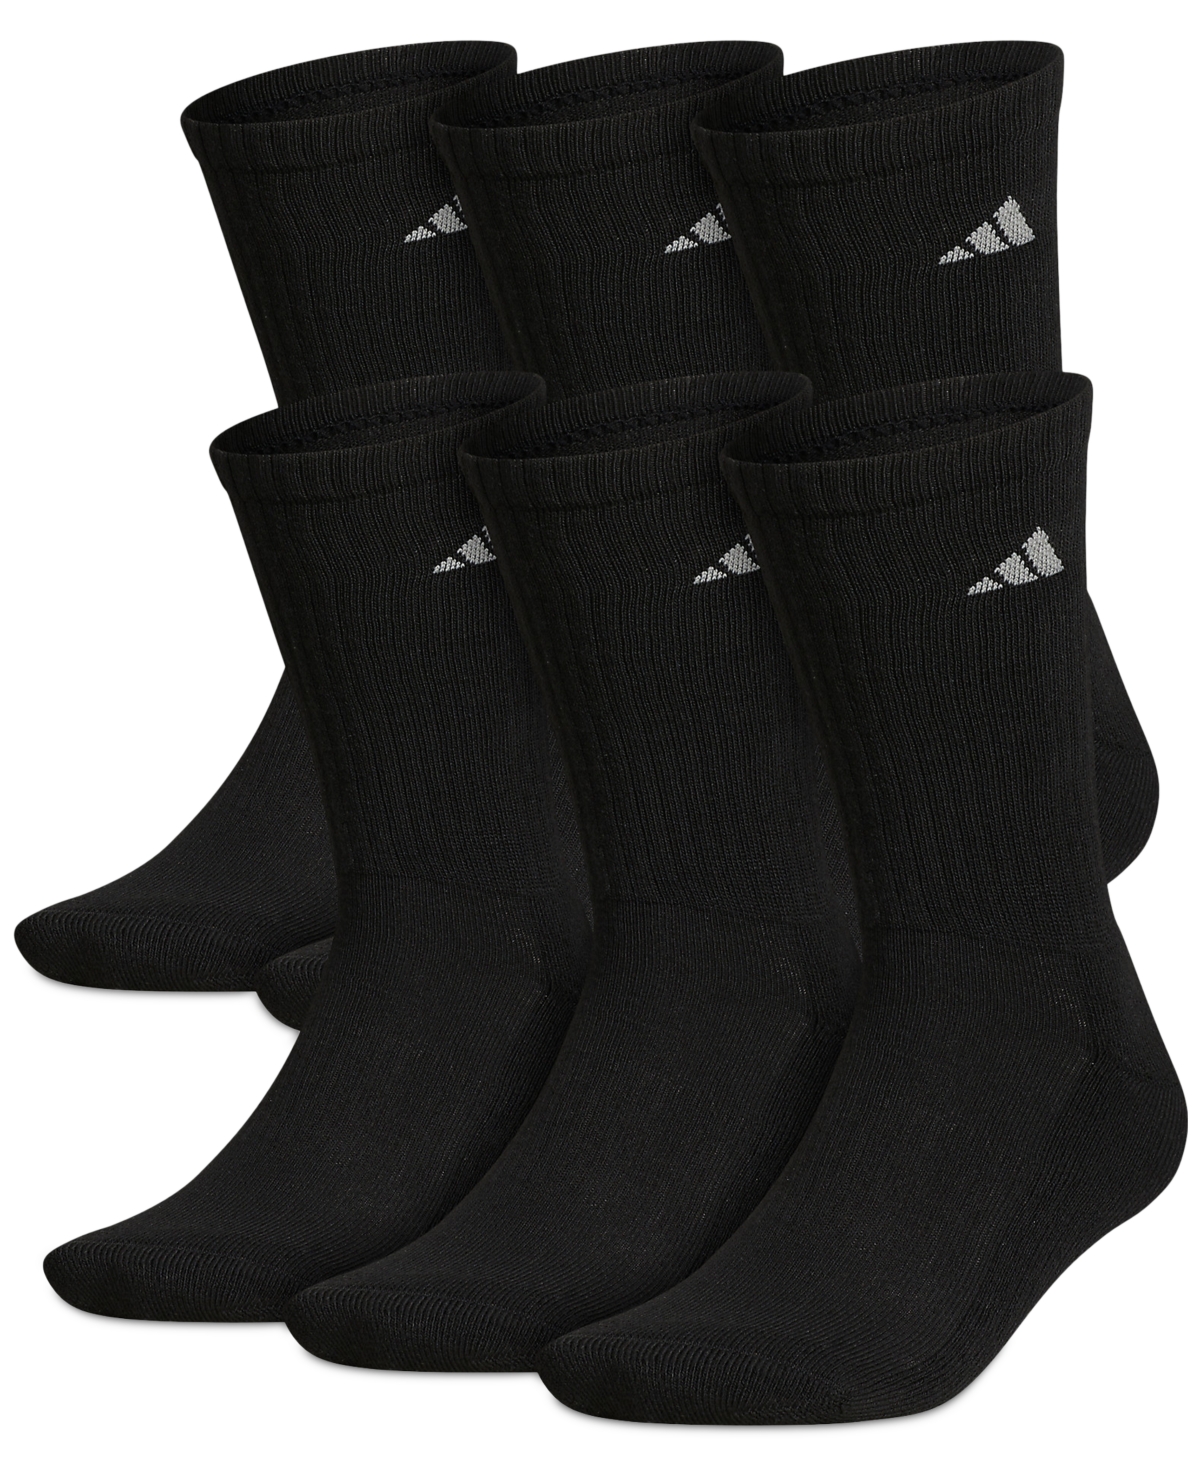 Men's Cushioned Athletic 6-Pack Crew Socks - Black